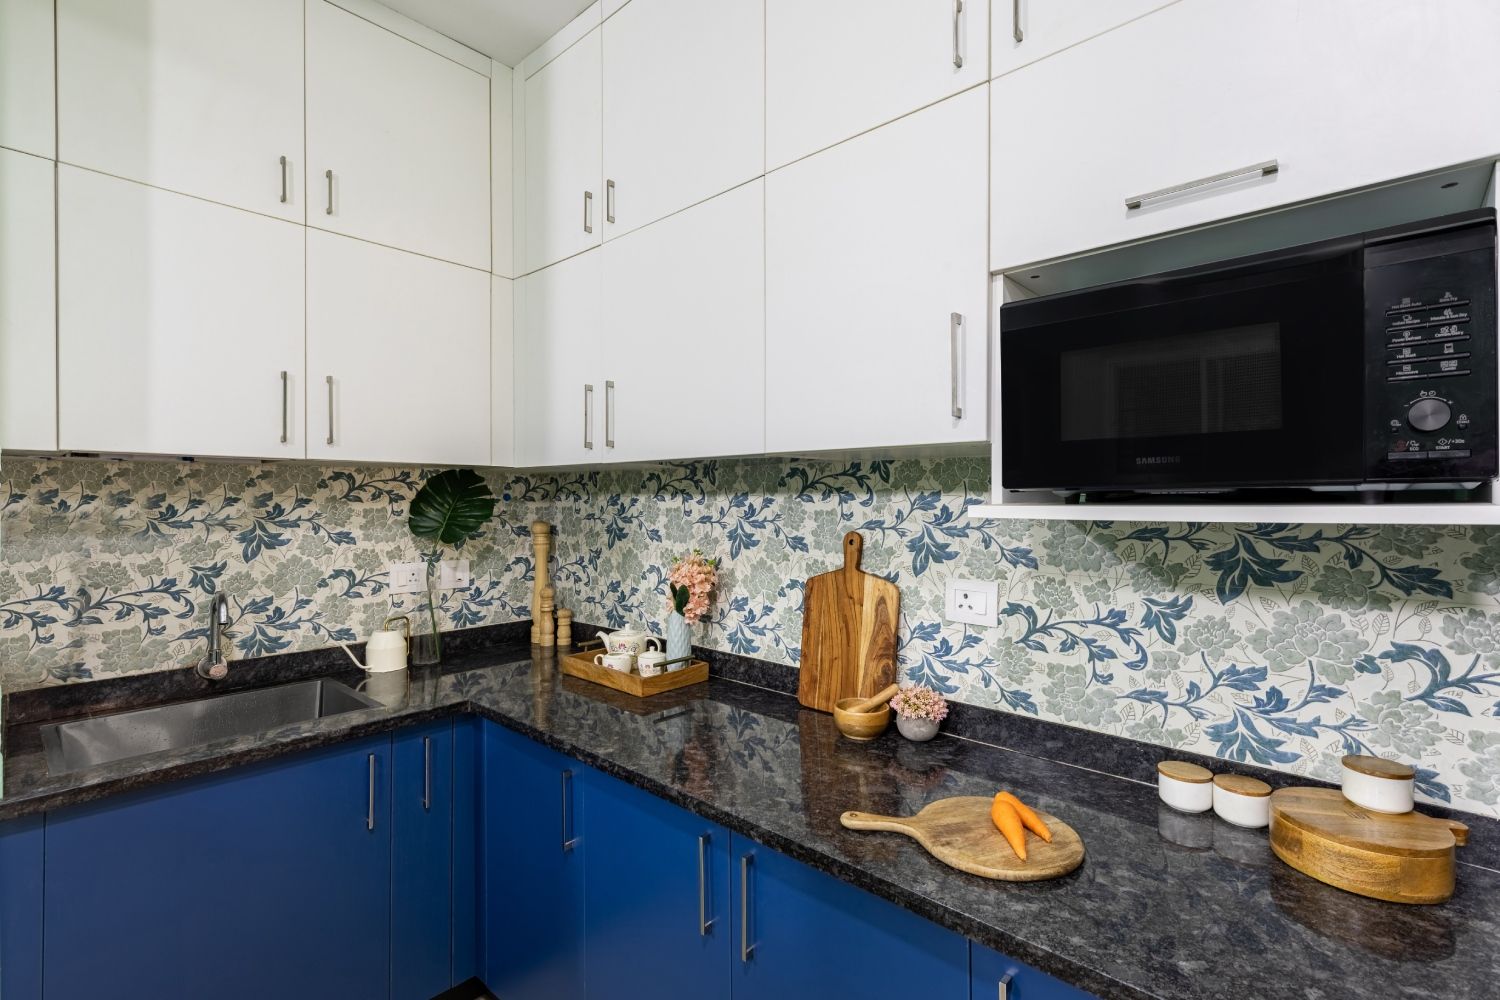 Modern L-Shaped Modular Kitchen Cabinet Design With Patterned Dado Tiles